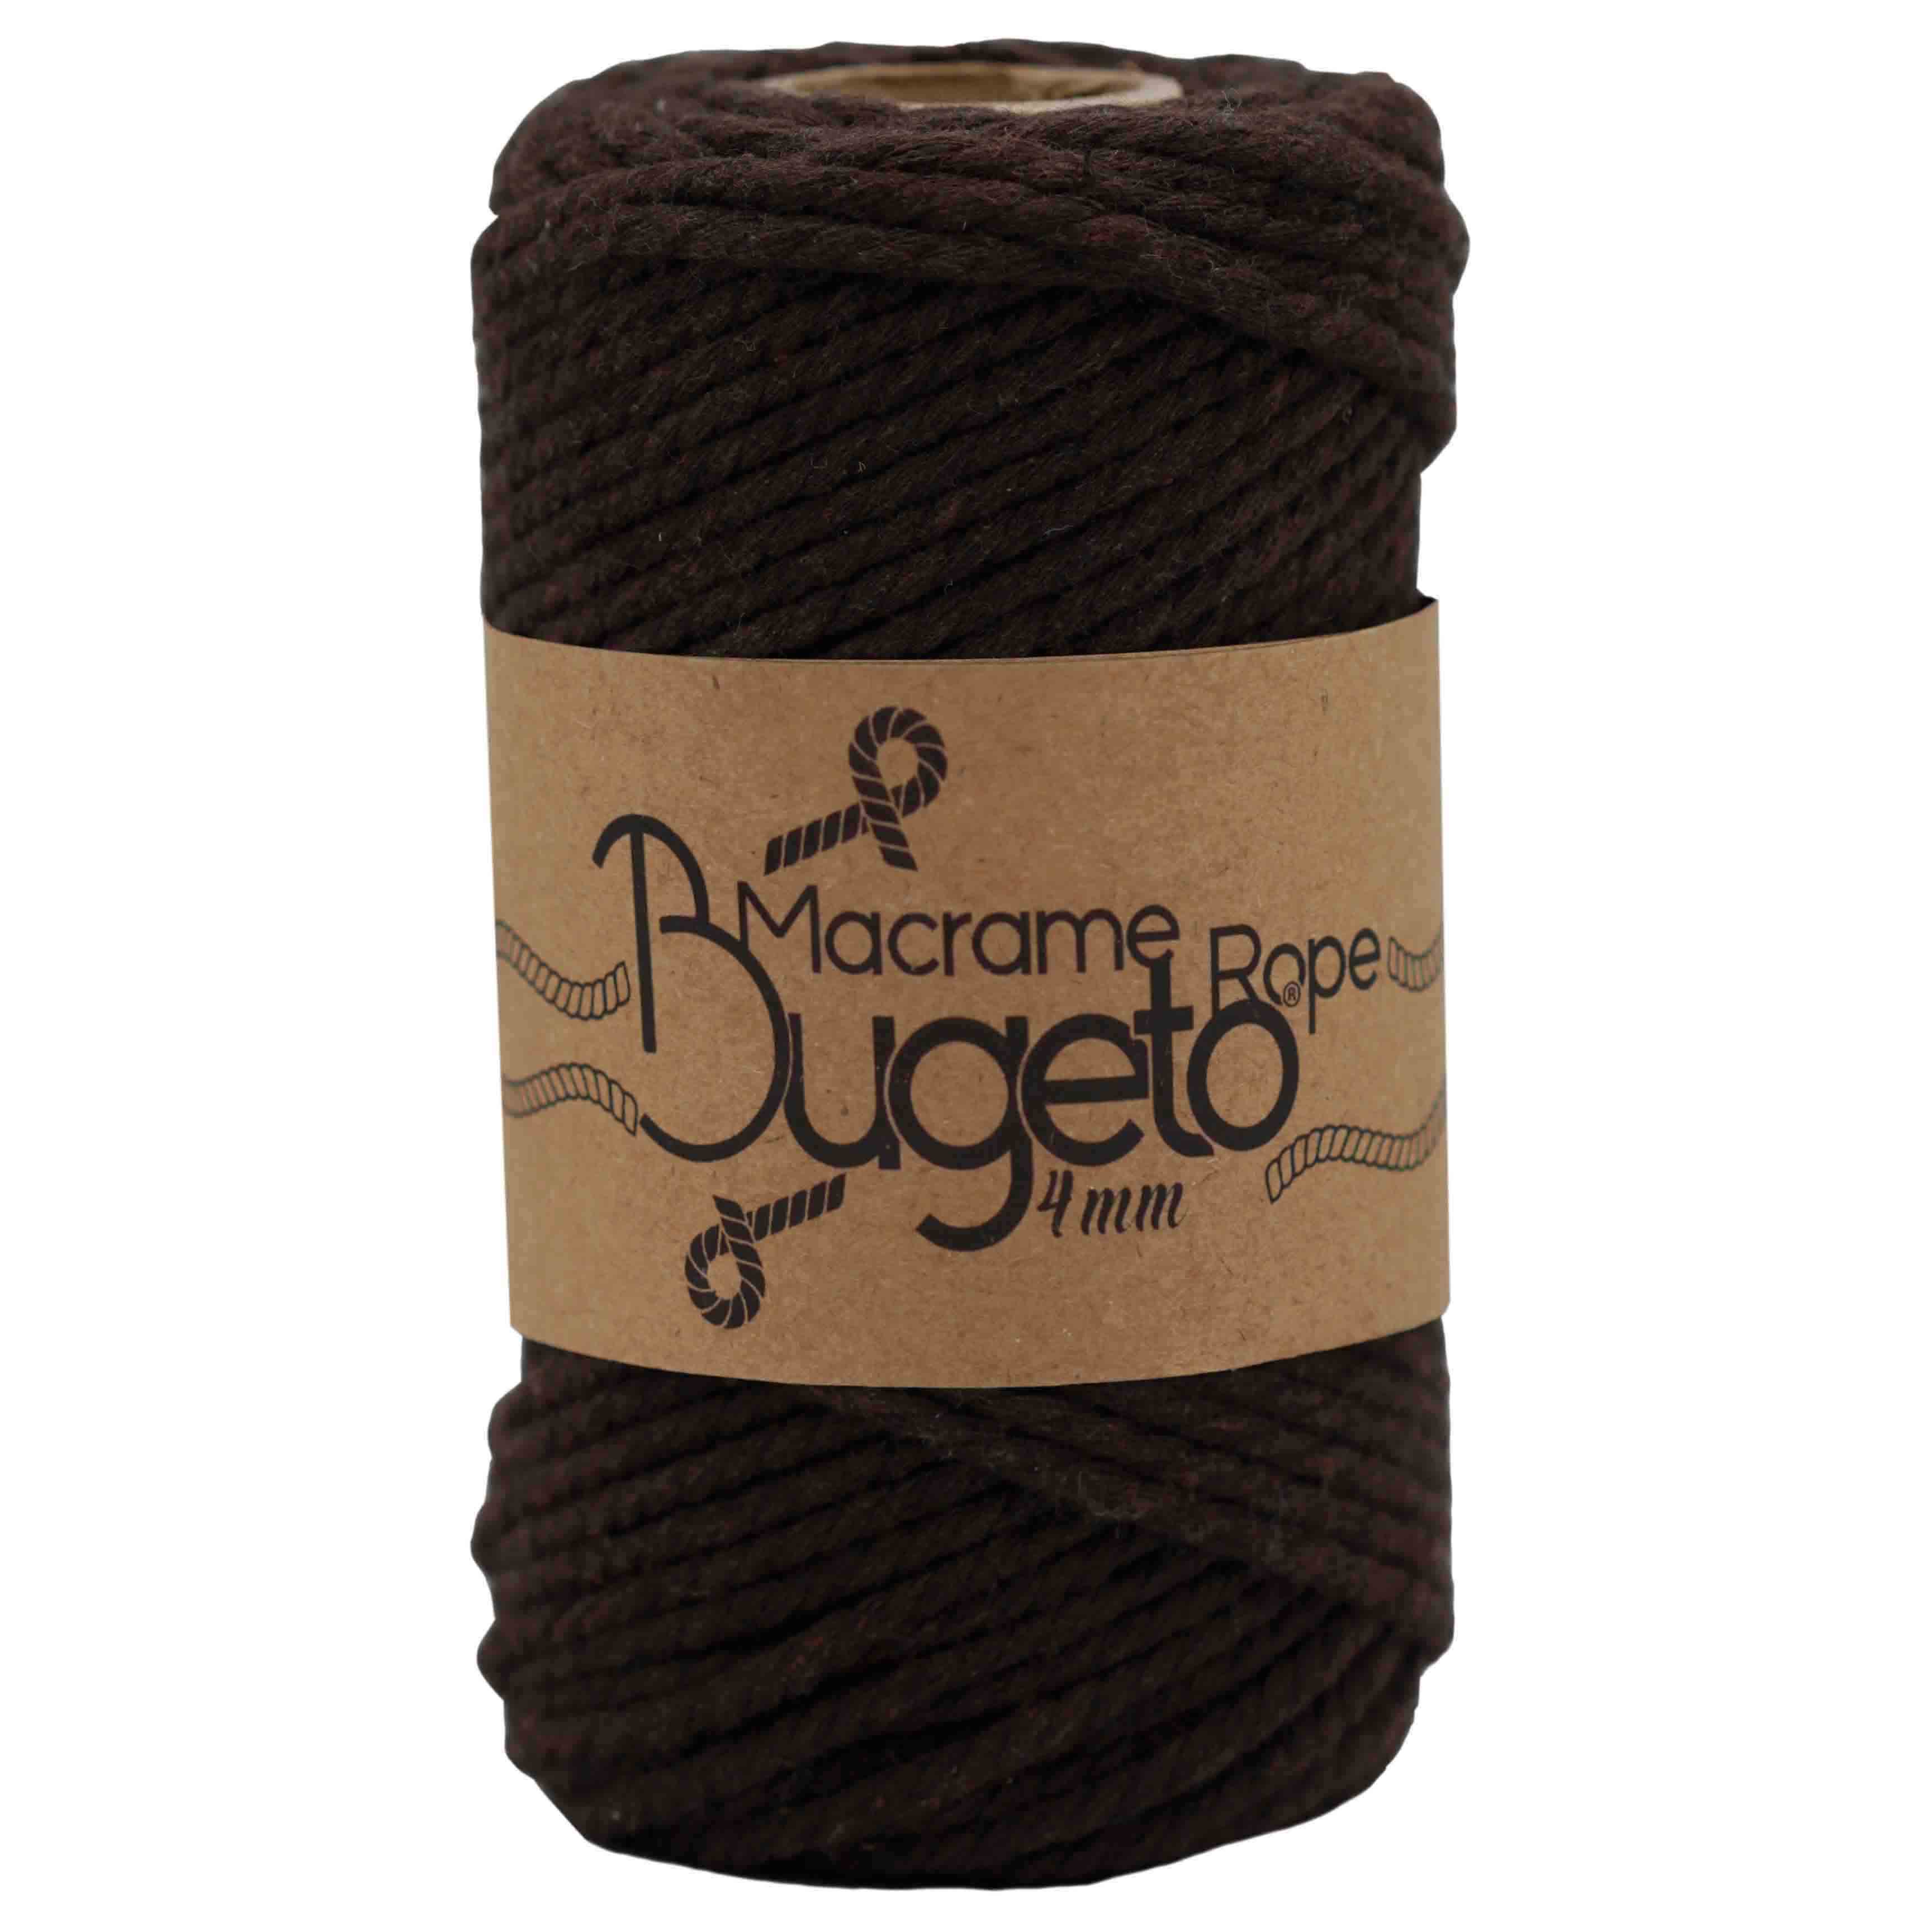 rope twist yarns cotton yarn
            recycled cotton bugeto yarn